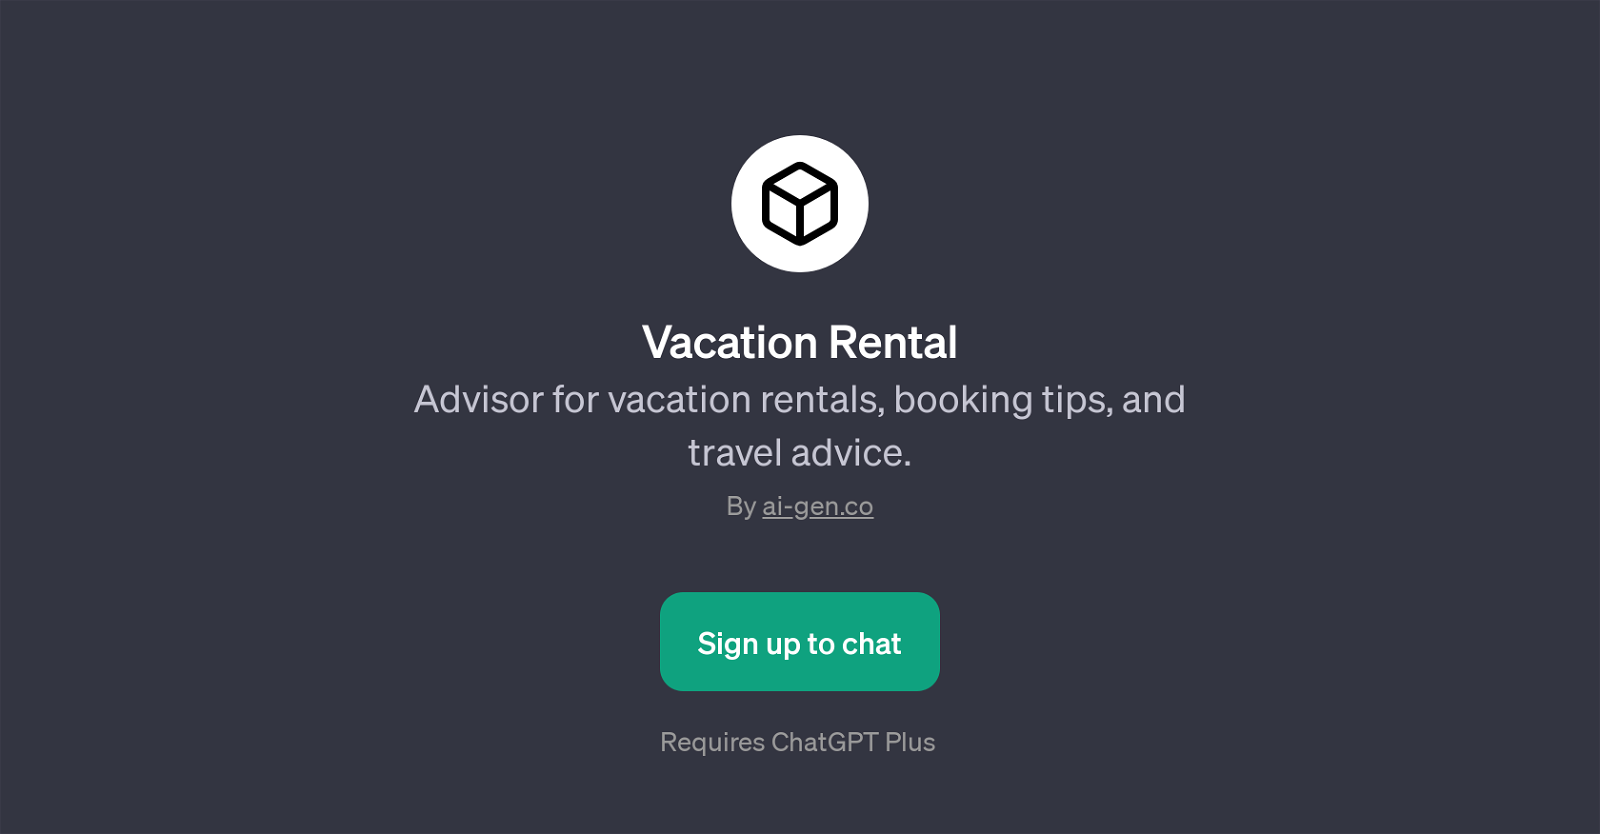 Vacation Rental website